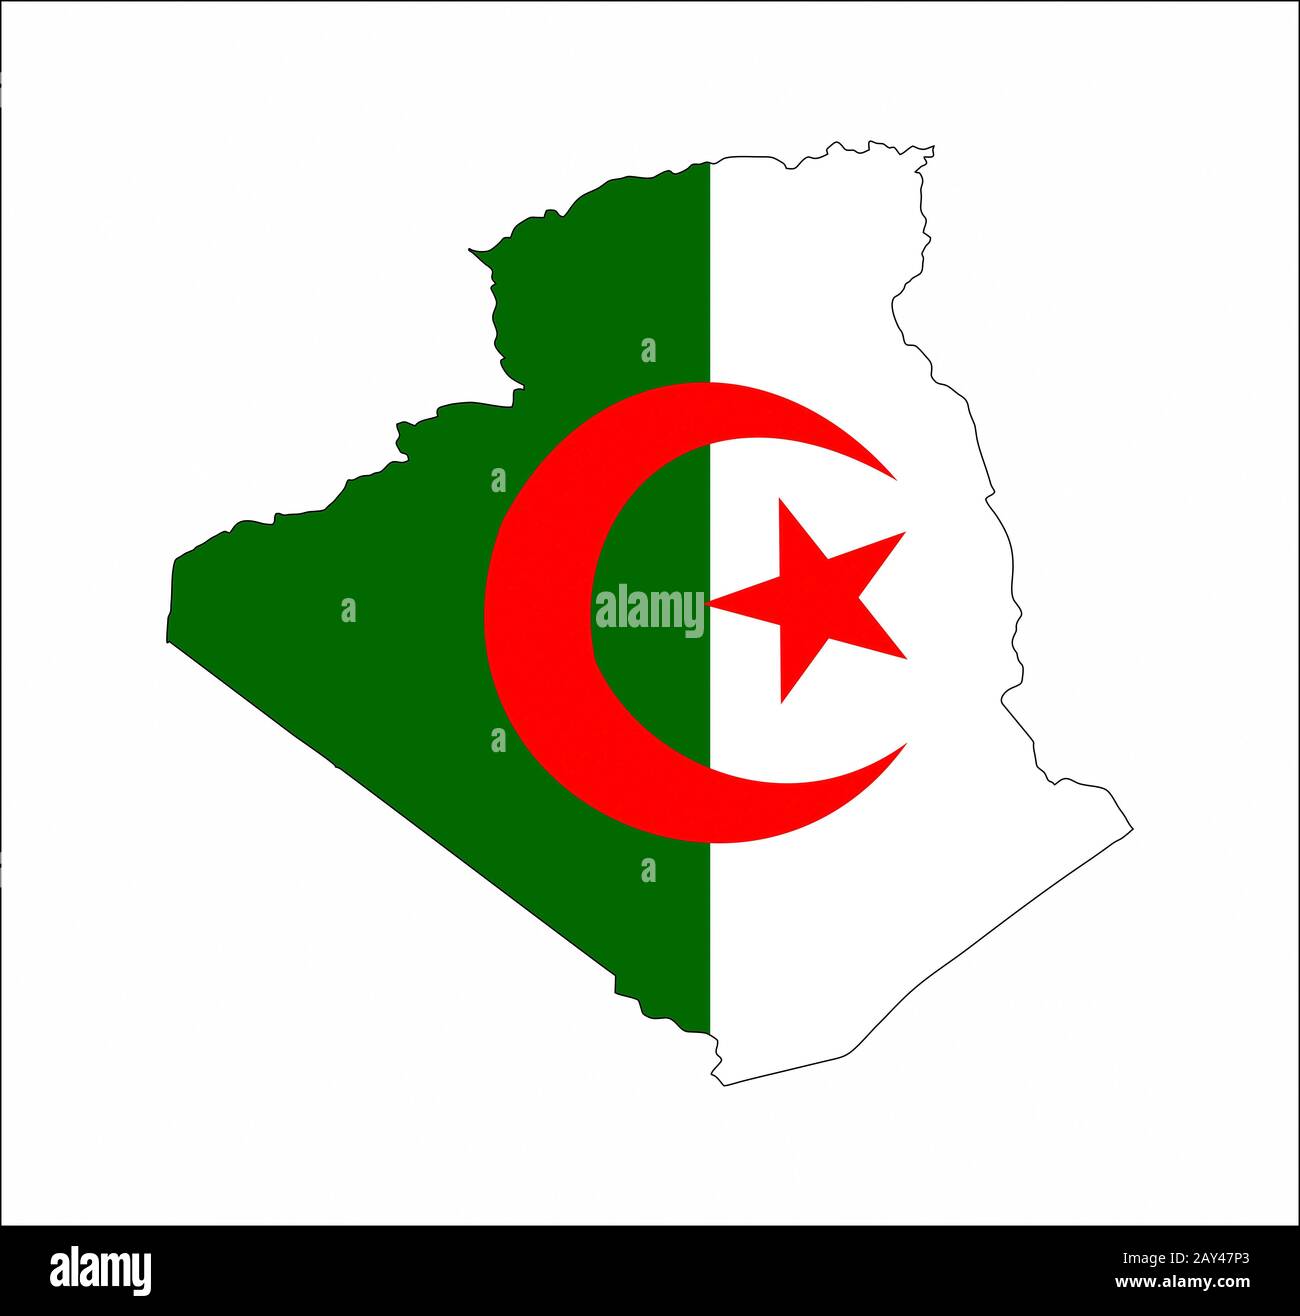 algeria flag map Stock Photo